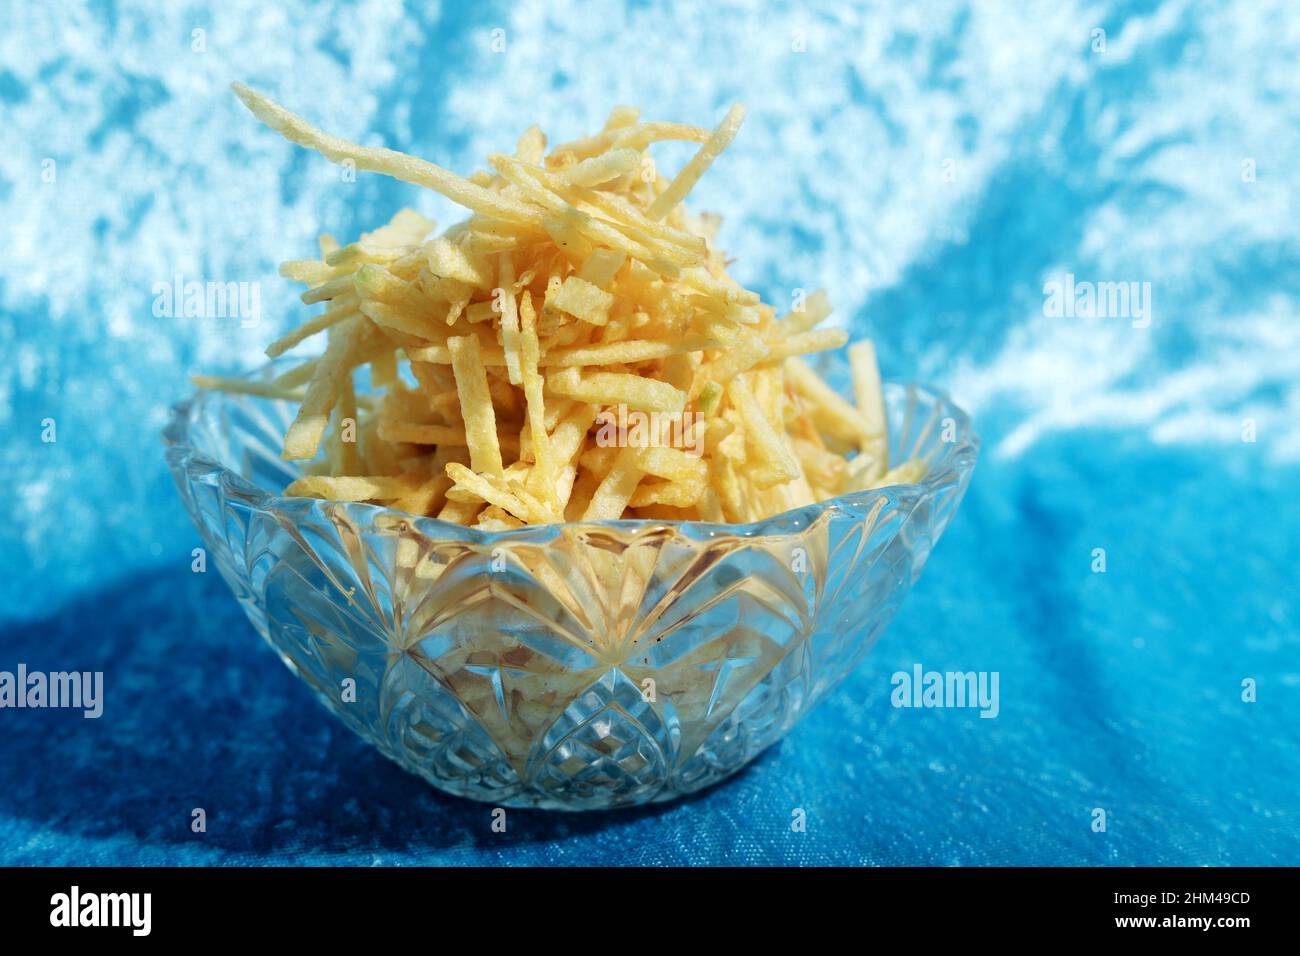 potato chips in elegant vintage glass bowl on light blue cloth Stock Photo